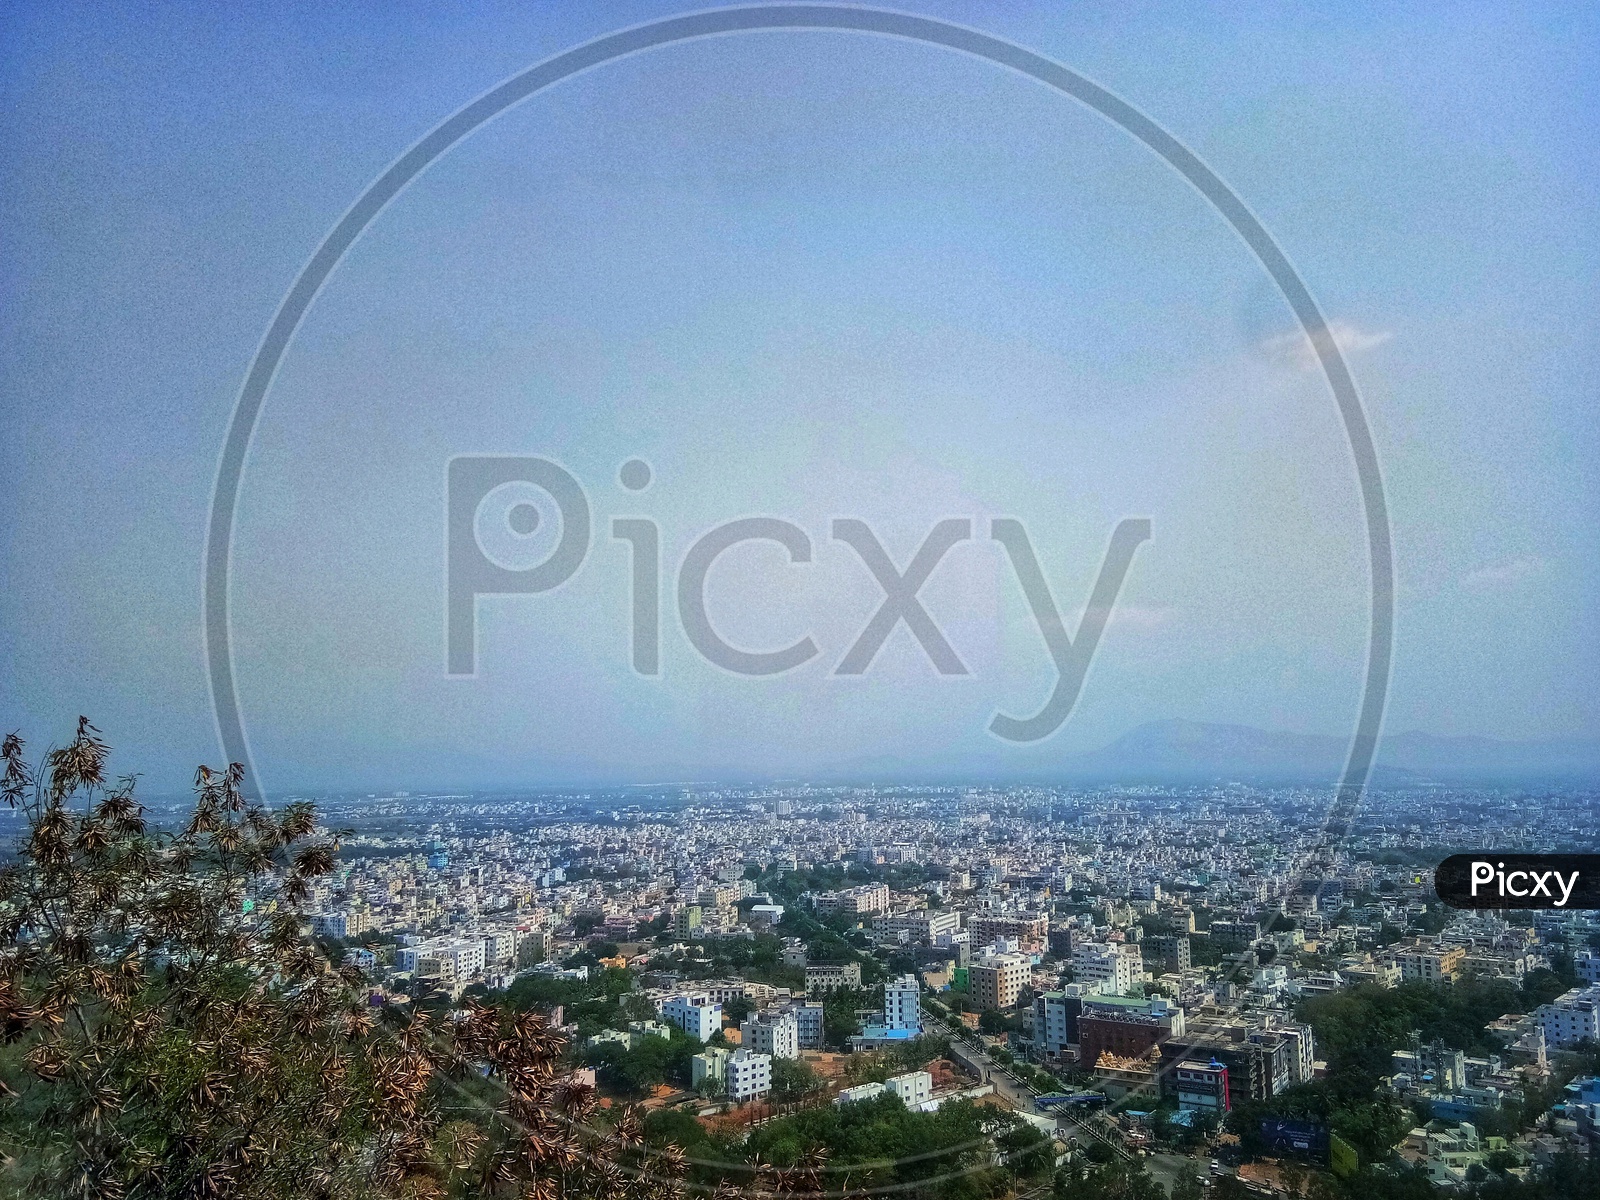 Tirupati city